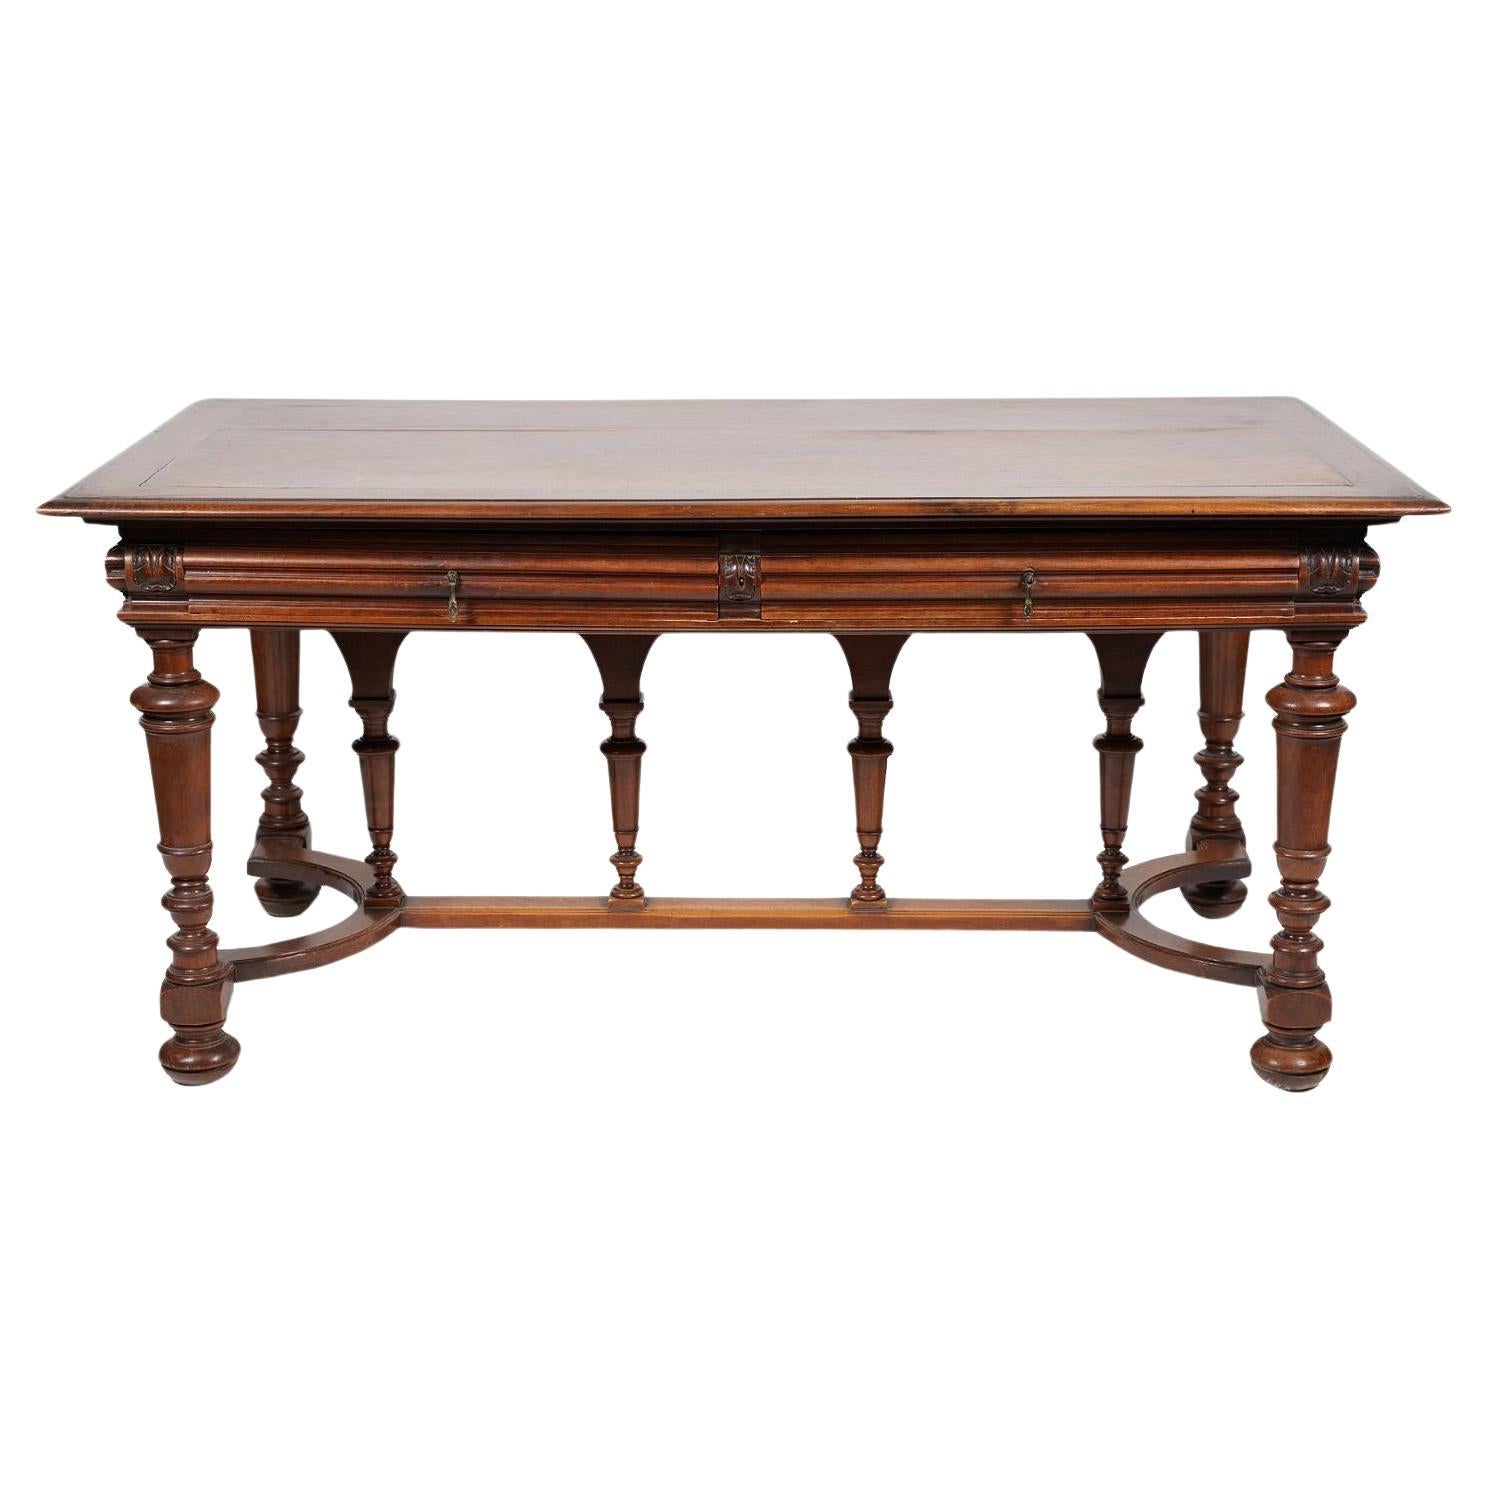 Antique American Renaissance Revival Walnut Library Table Desk Mid 19th Century For Sale